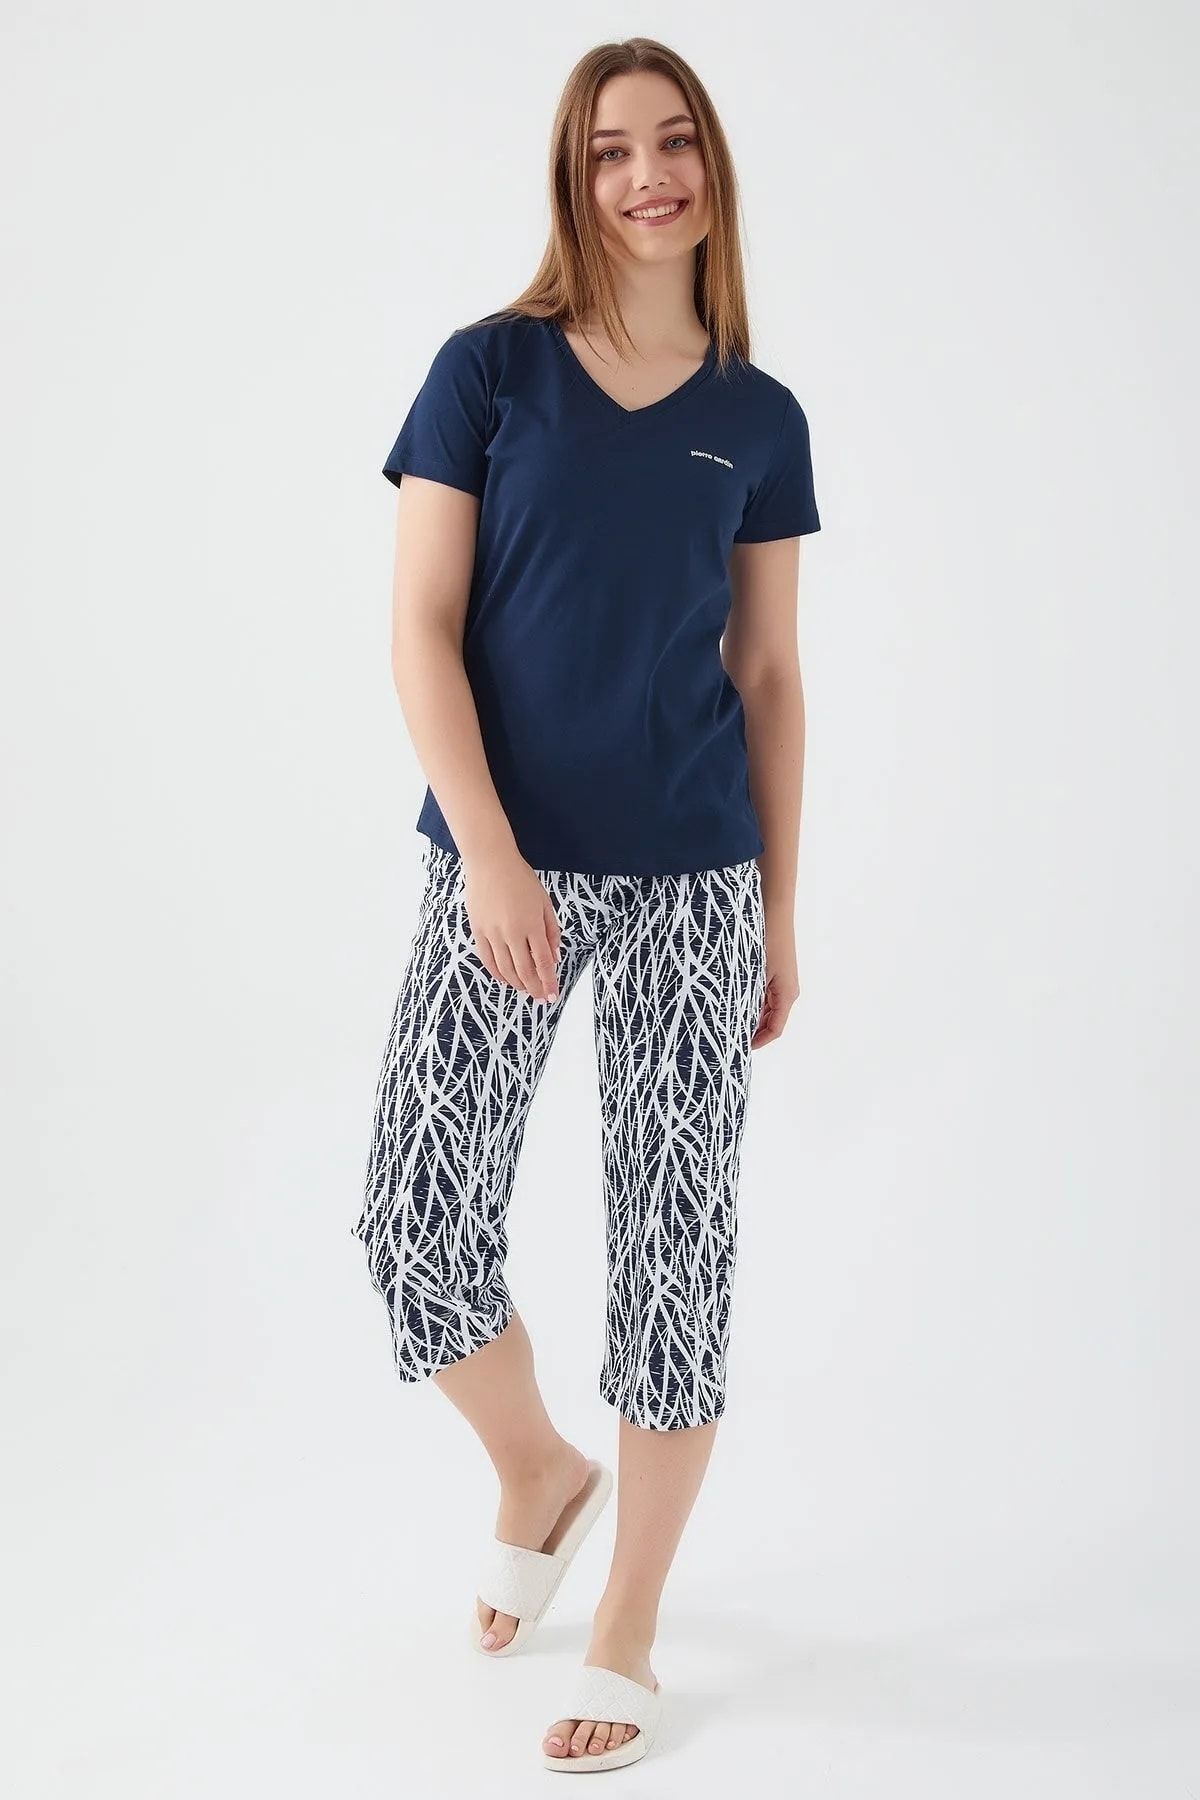 Pierre Cardin V-Neck 100% Cotton Women's Capri Pajama Set 8573 - Trendyol